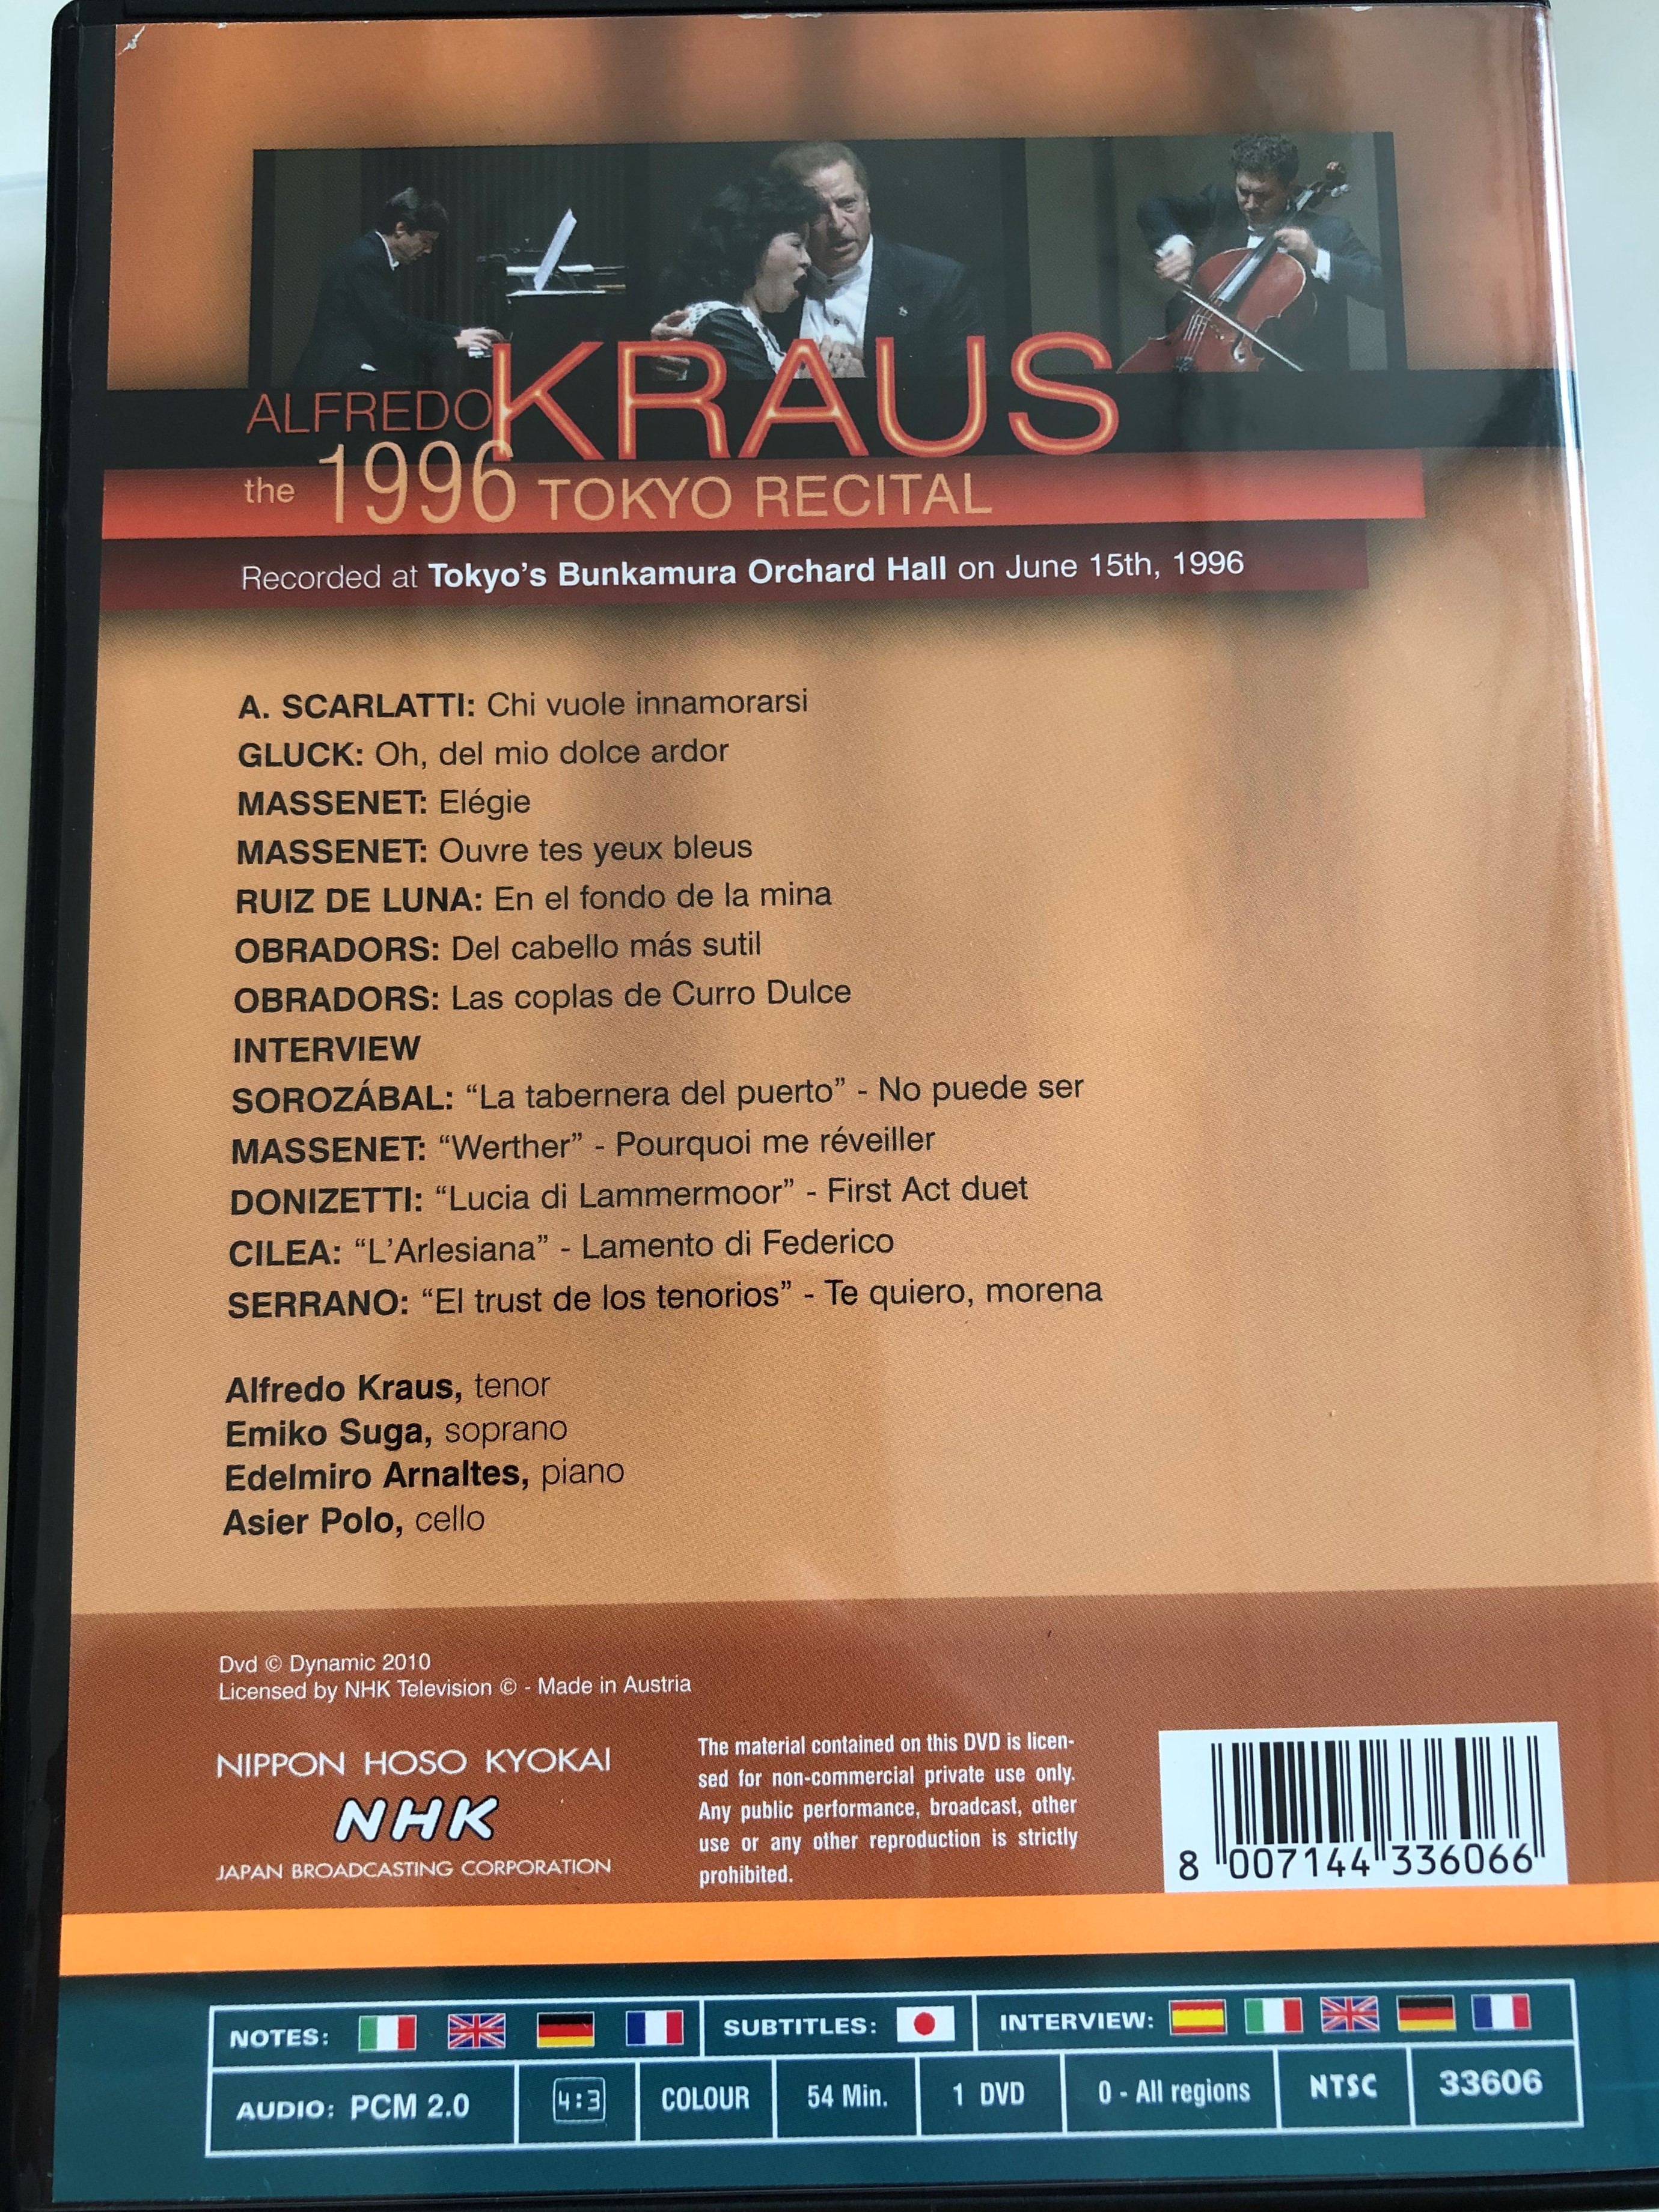 afredo-kraus-the-1996-tokyo-recital-dvd-2010-celebrating-40-years-of-career-recorded-at-tokyo-bunkamura-orchard-hall-1996-alfredo-kraus-tenor-emiko-suga-soprano-edelmiro-arnaltes-piano-asier-polo-cello-3-.jpg